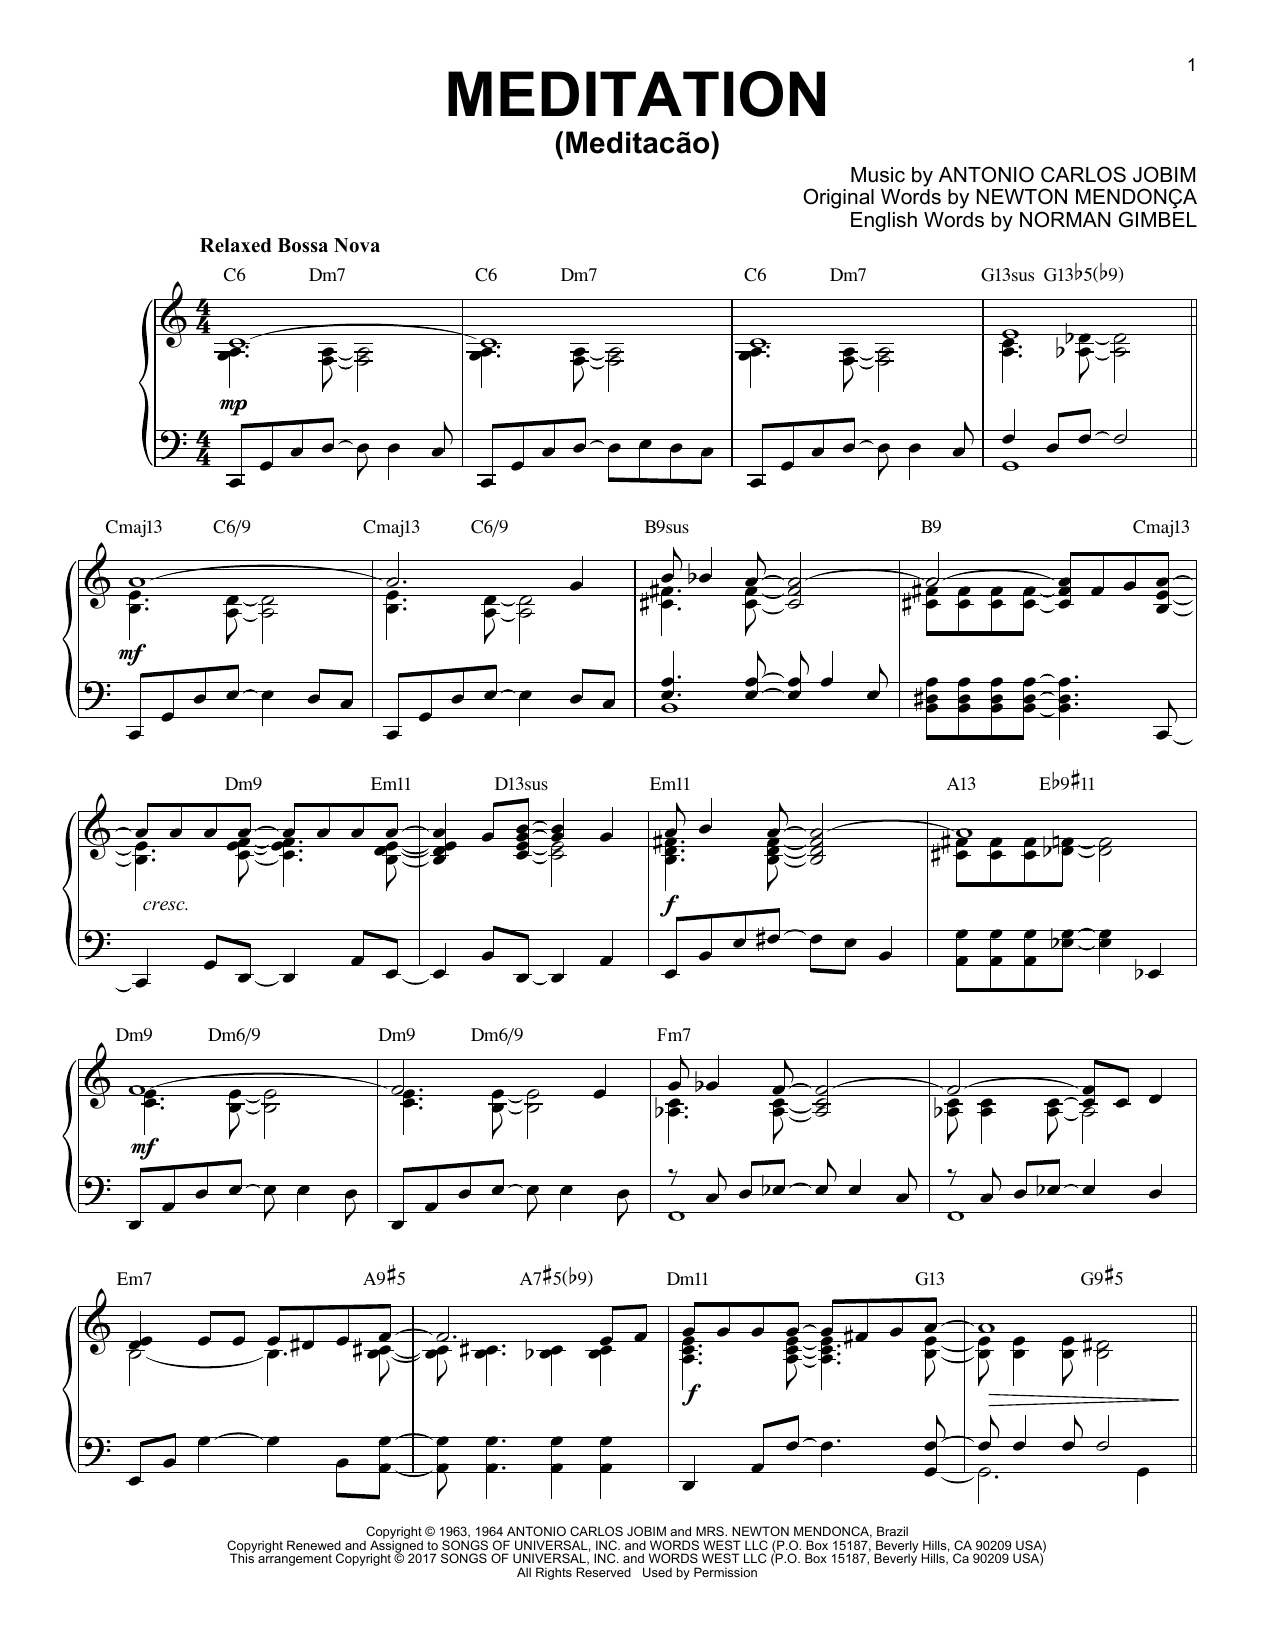 Download Antonio Carlos Jobim Meditation (Meditacao) [Jazz version] Sheet Music